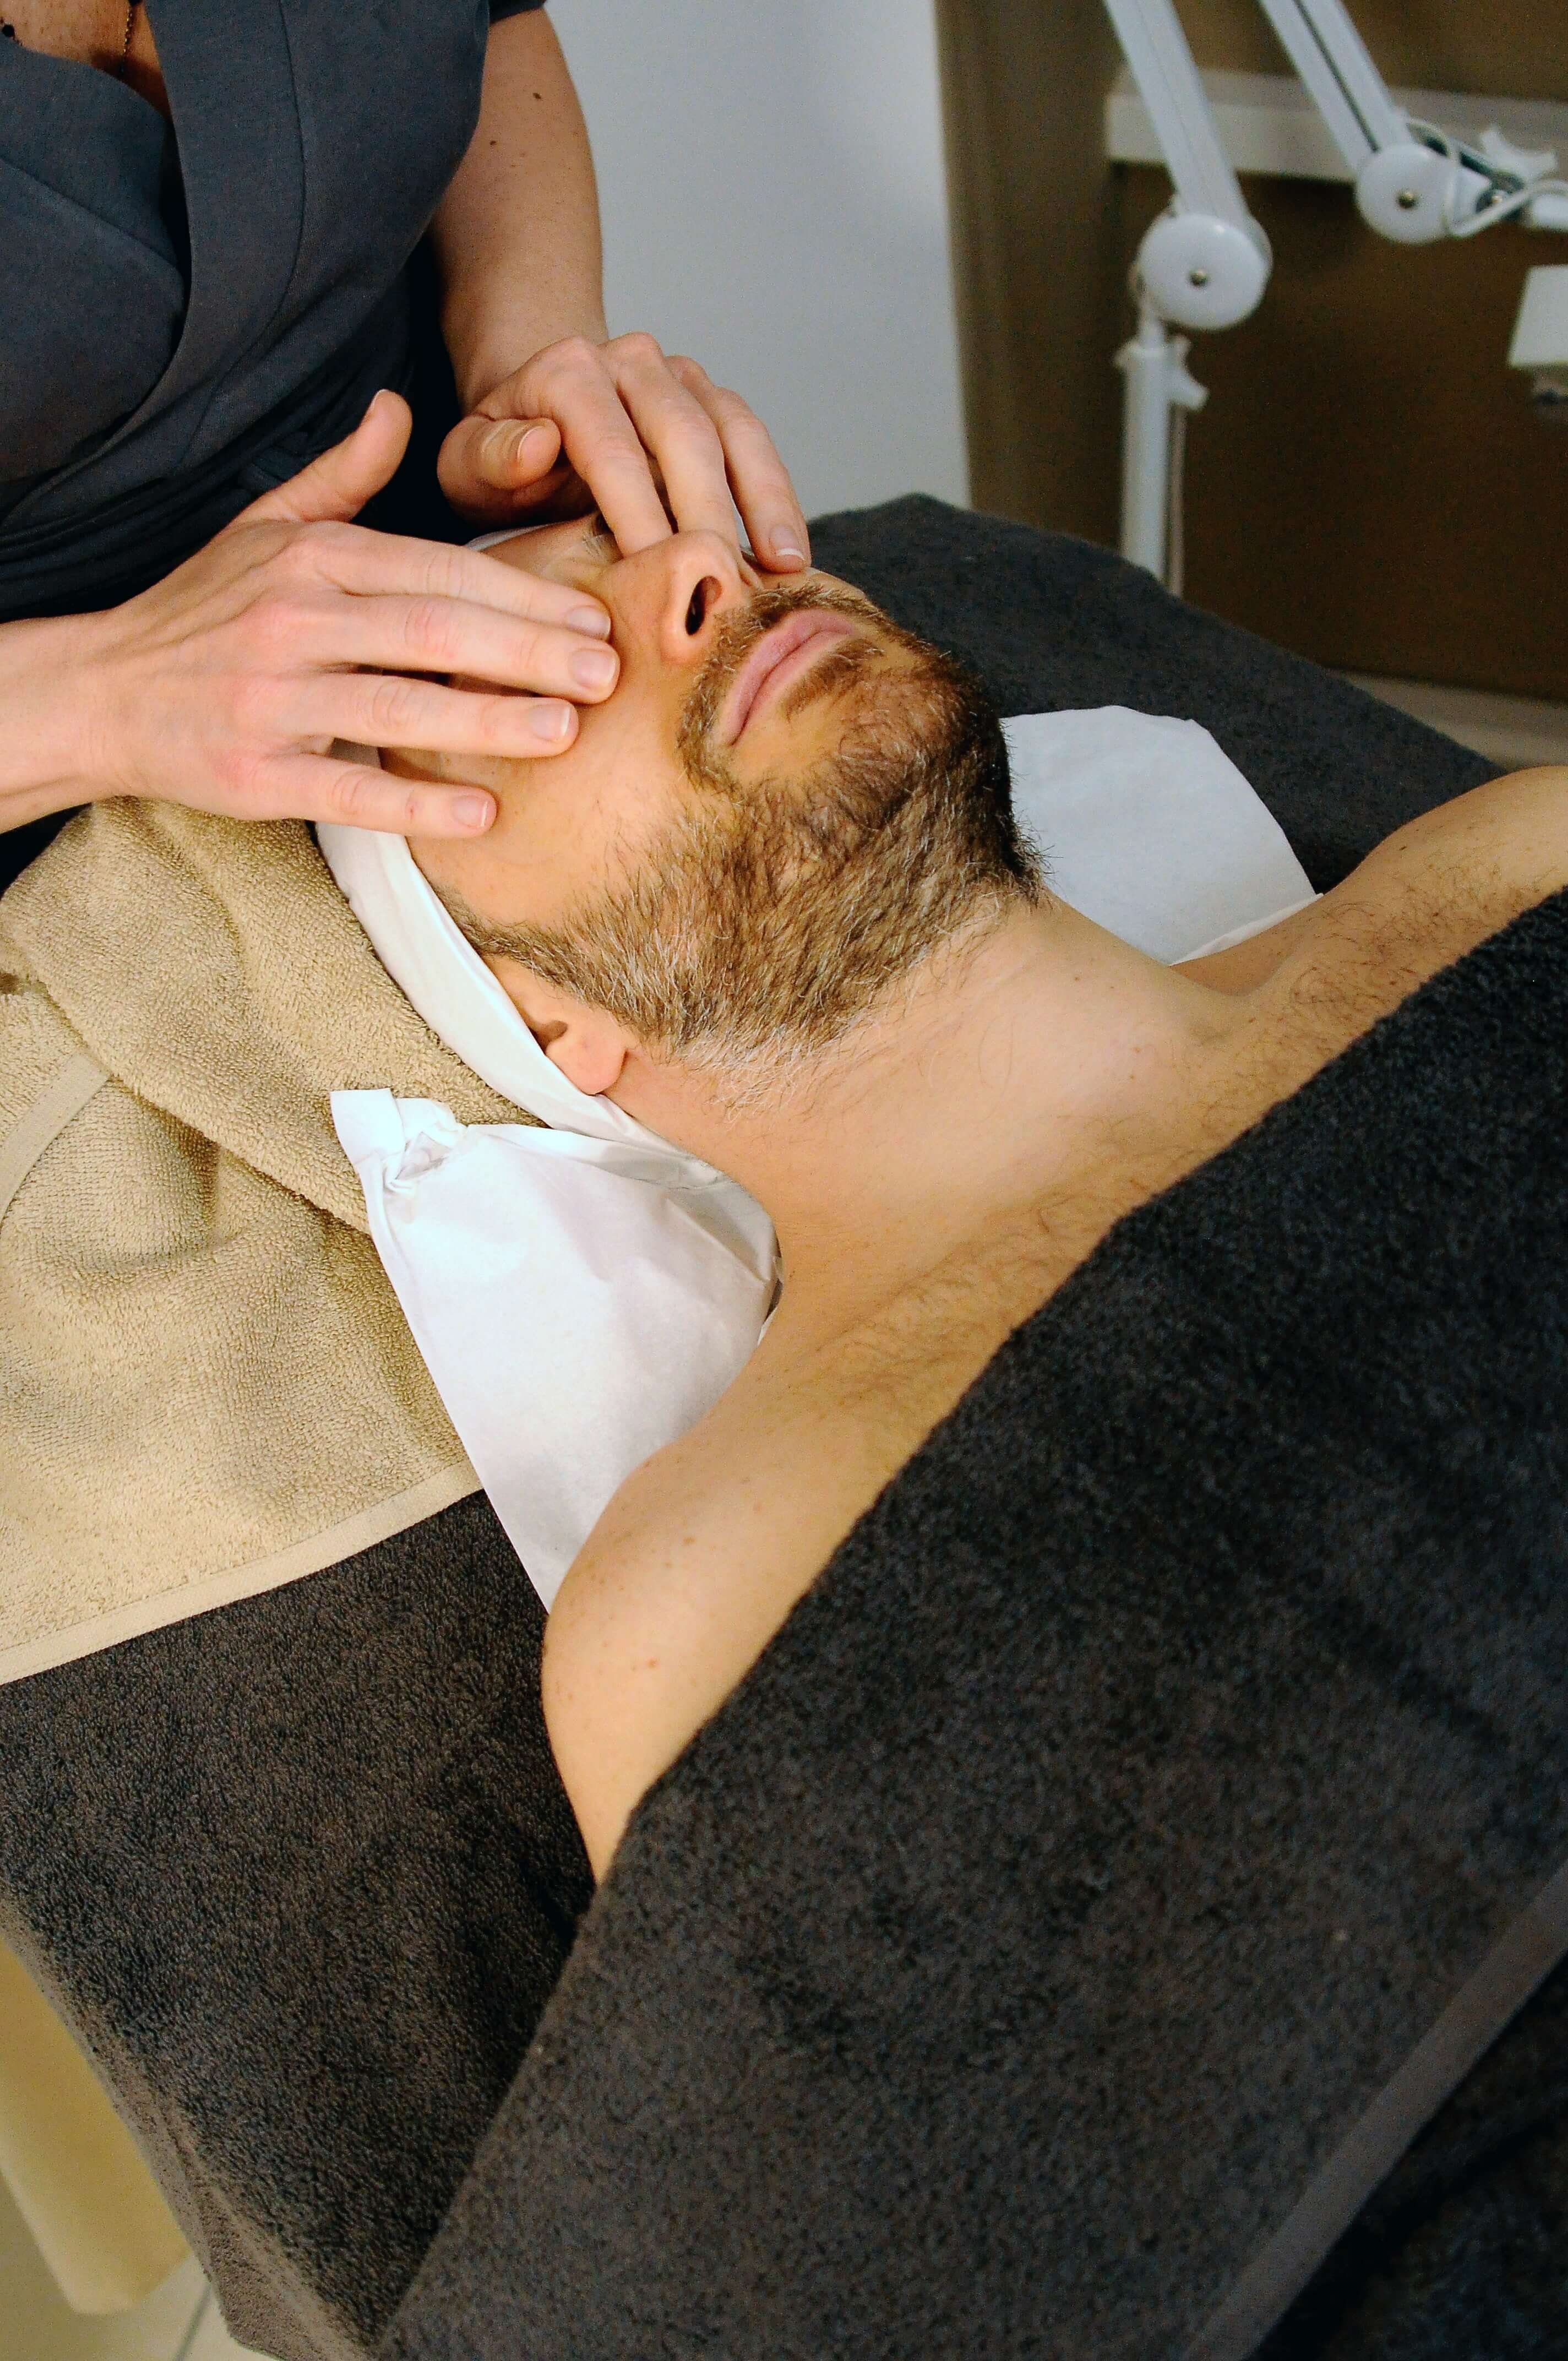 Barbat la salonul de cosmetica in timpul unui masaj facial